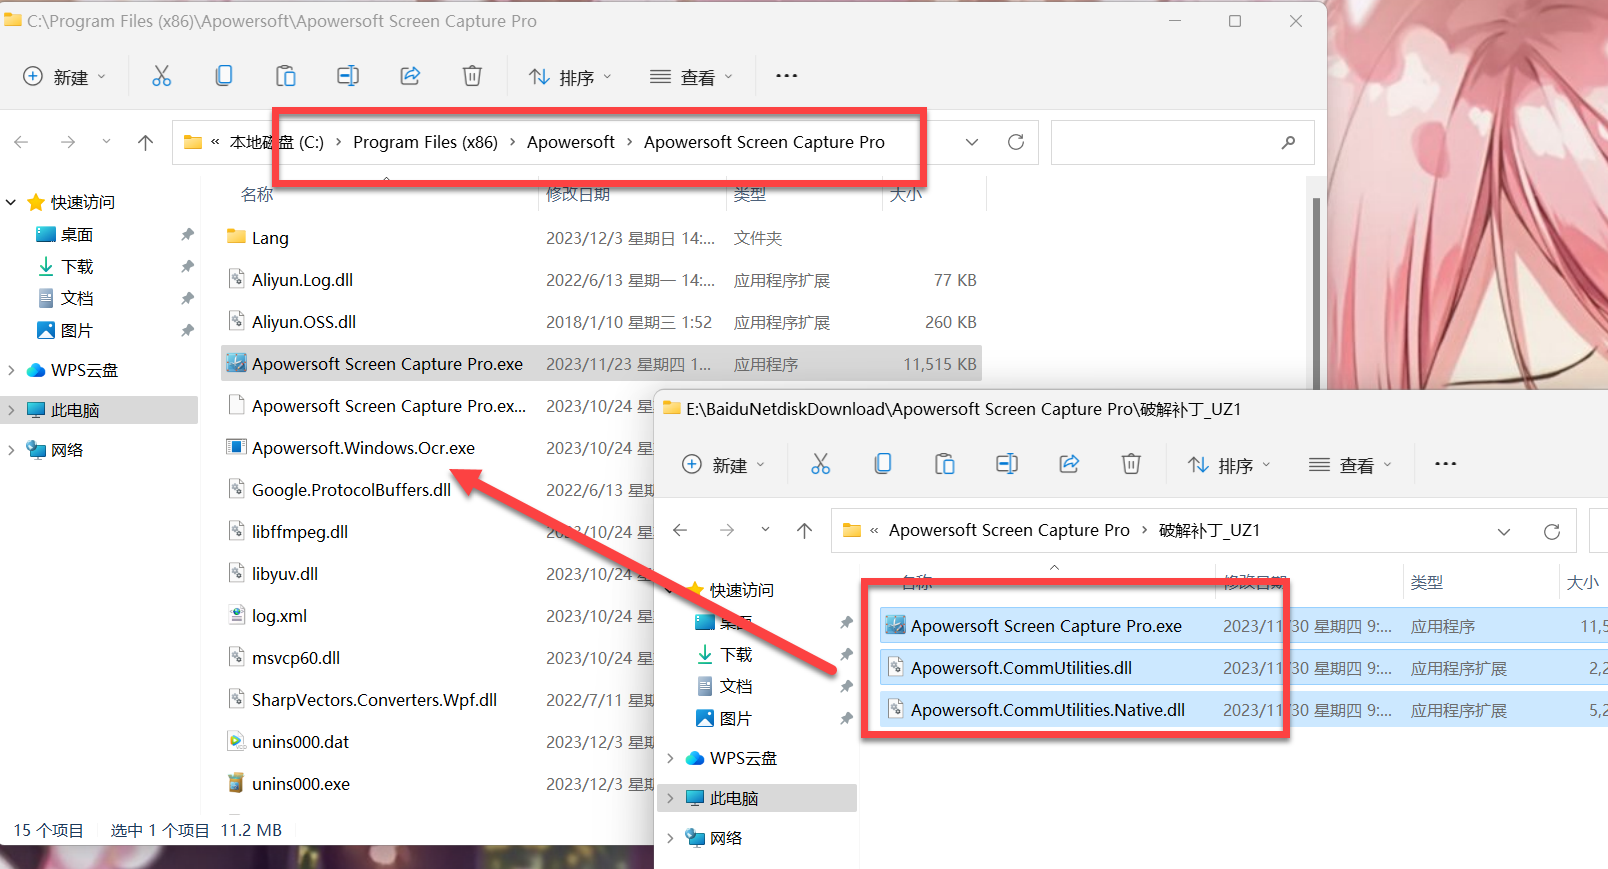 Apowersoft Screen Capture Pro(傲软专业截屏王) 1.5.4.3 中文激活版下载